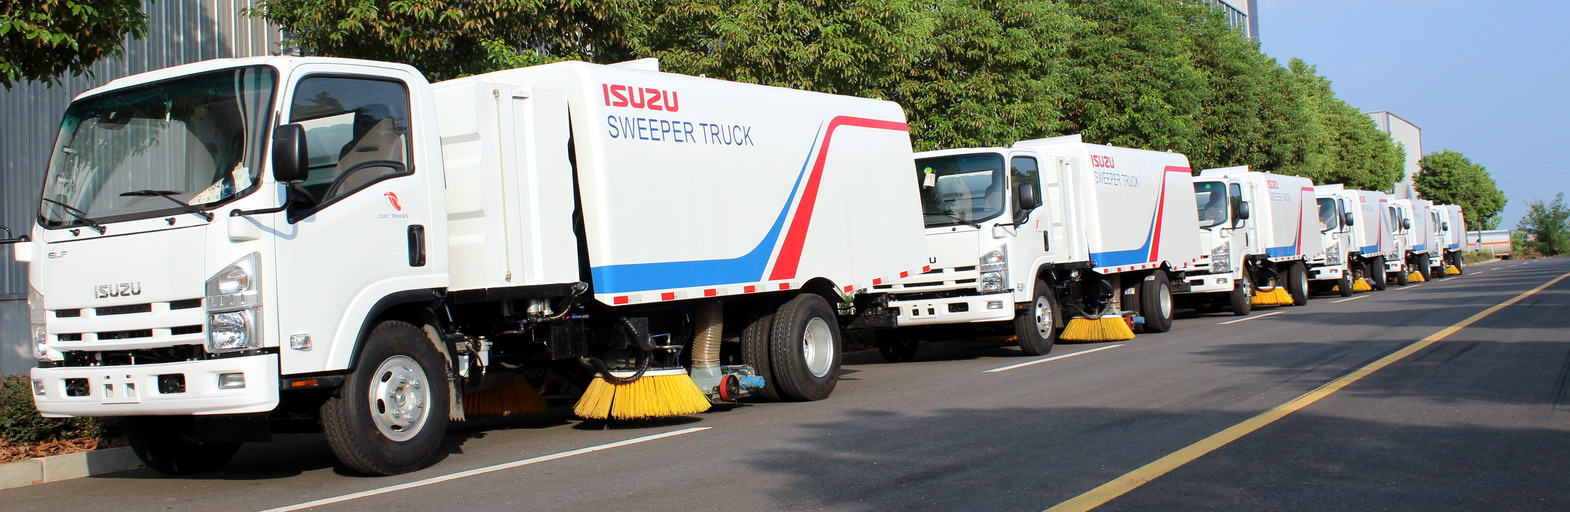 ISUZU road sweeper truck